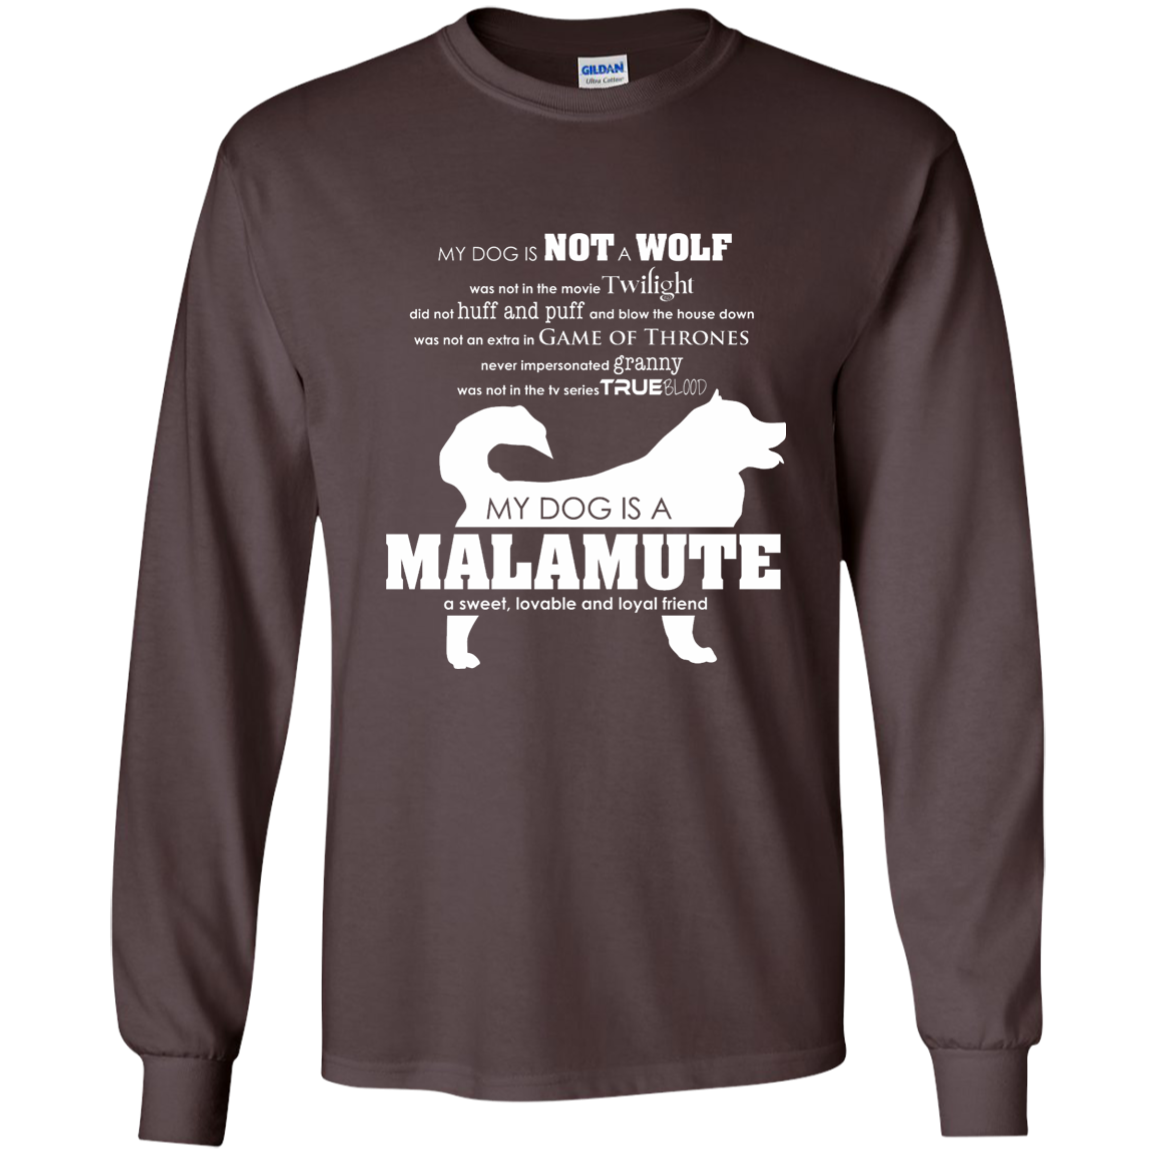 My Dog is Not a Wolf, My Dog is a Malamute - Longsleeve Tshirt